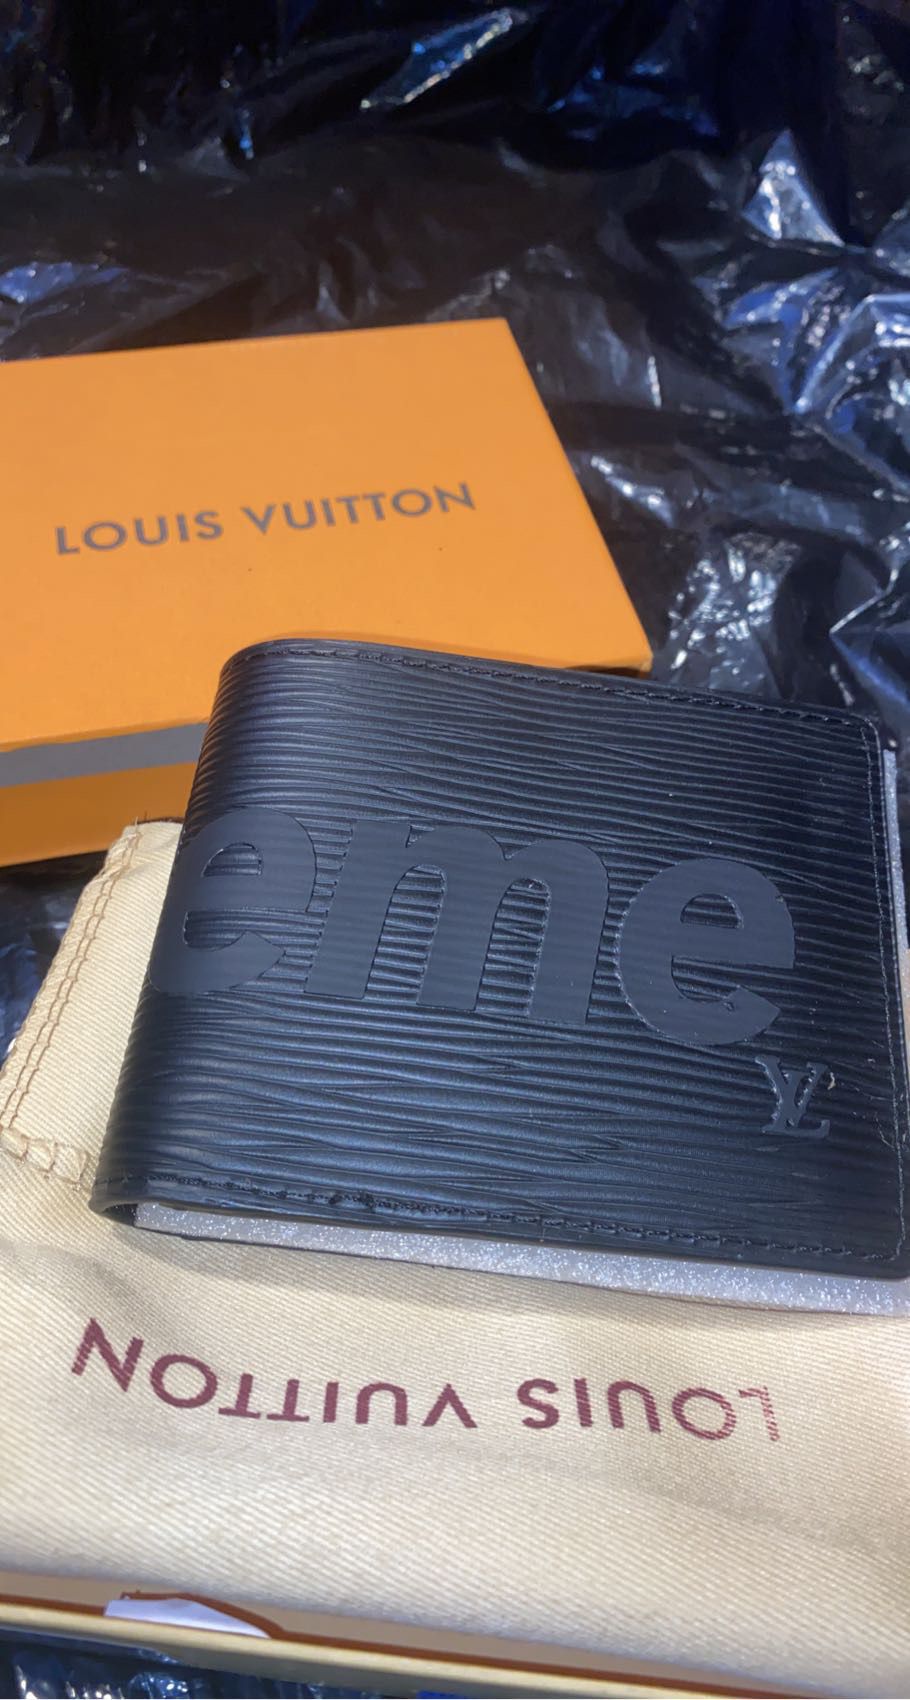 Blacked Out Supreme X Louis Vuitton Wallet 